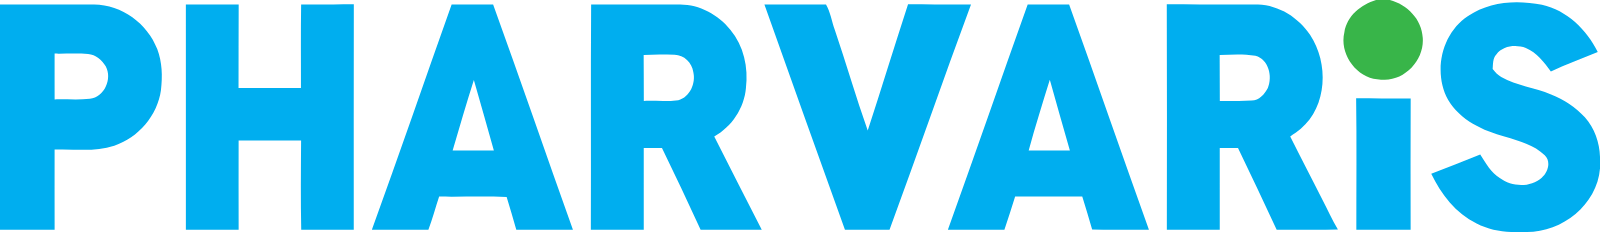 Pharvaris logo large (transparent PNG)